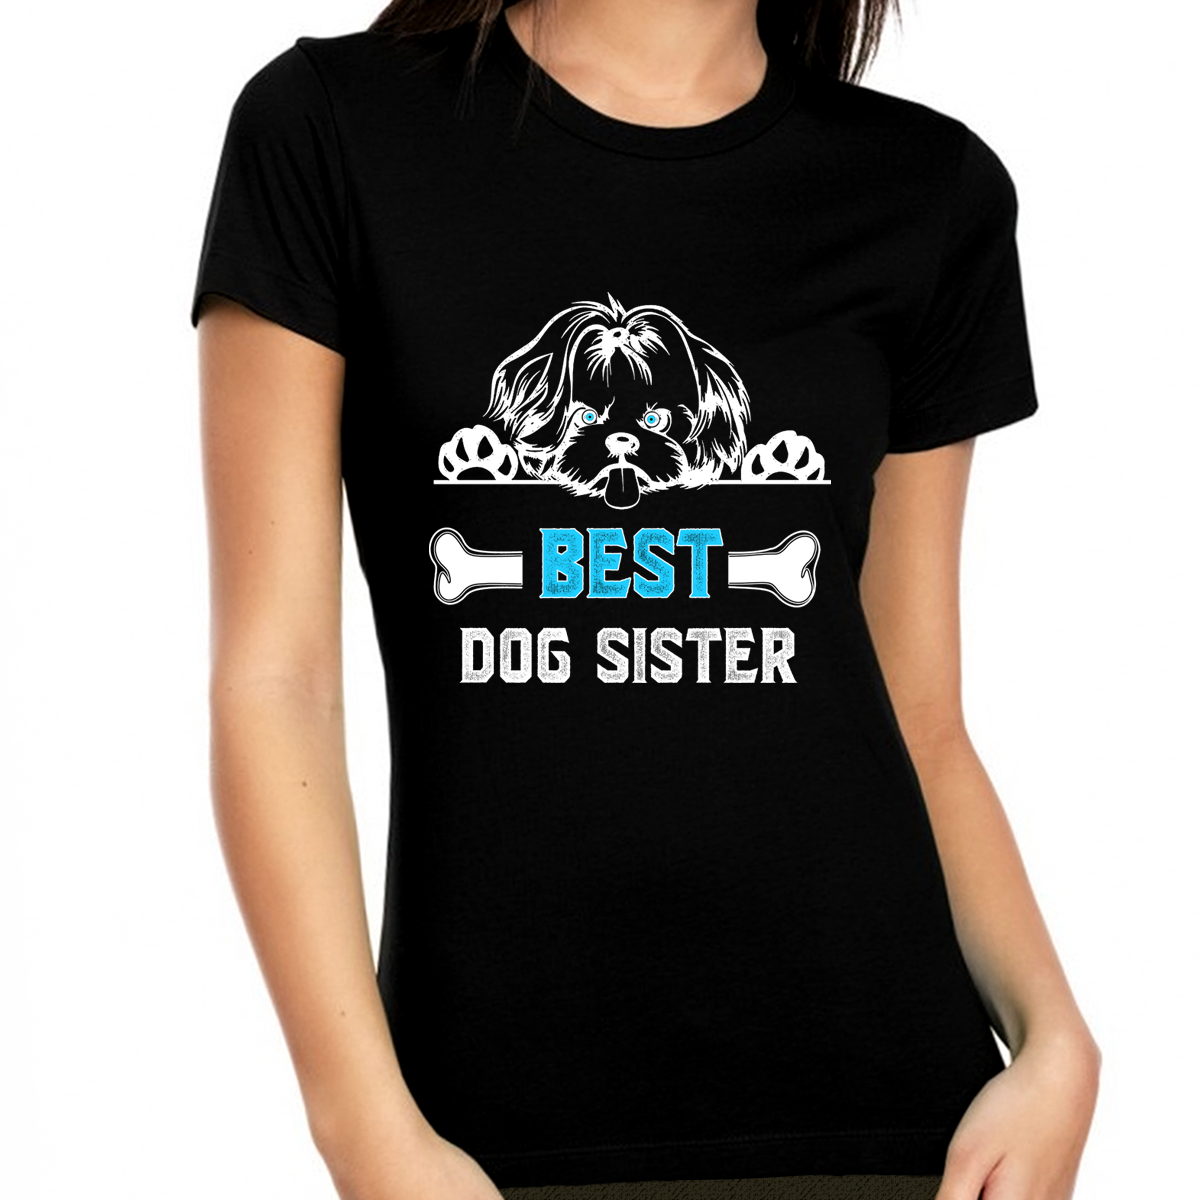 Best Dog Sister Shirt for Women and Teens - Dog Sister Gift Shirt